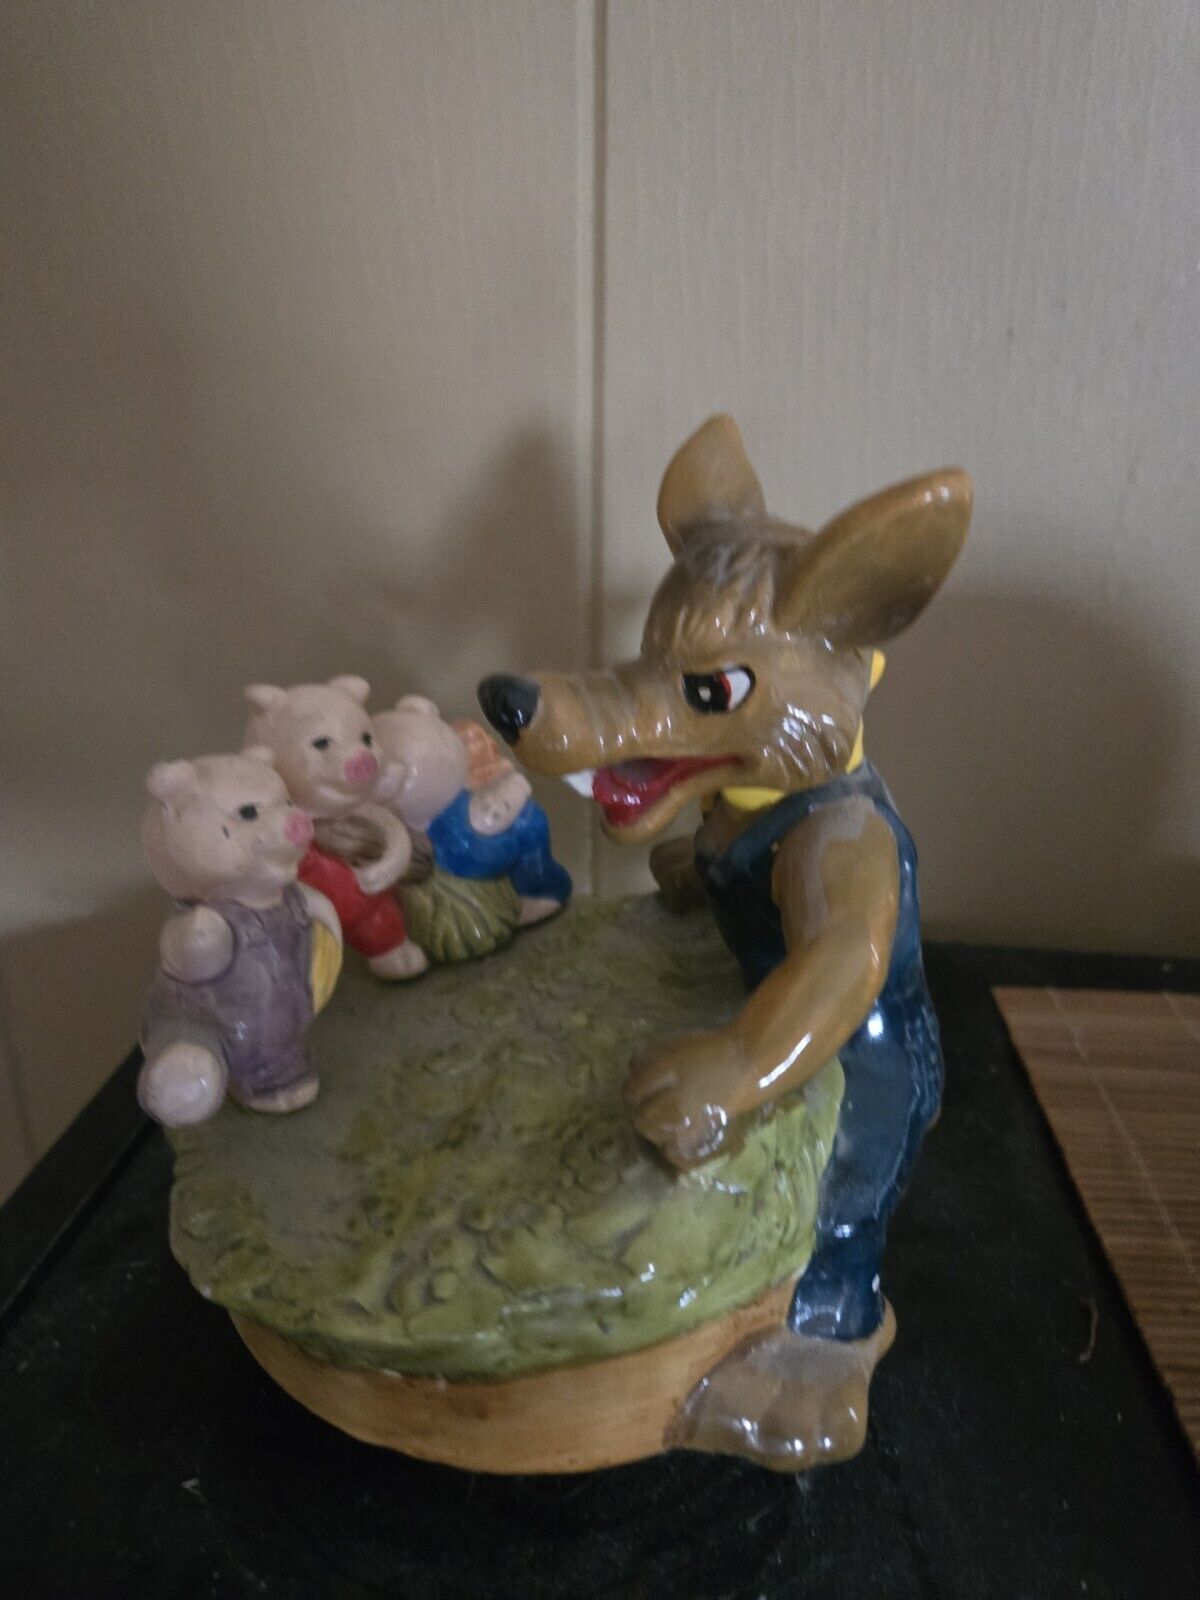 Vintage Aldon “The Three Little Pigs & Big Bad Wolf” Ceramic Figural Music Box